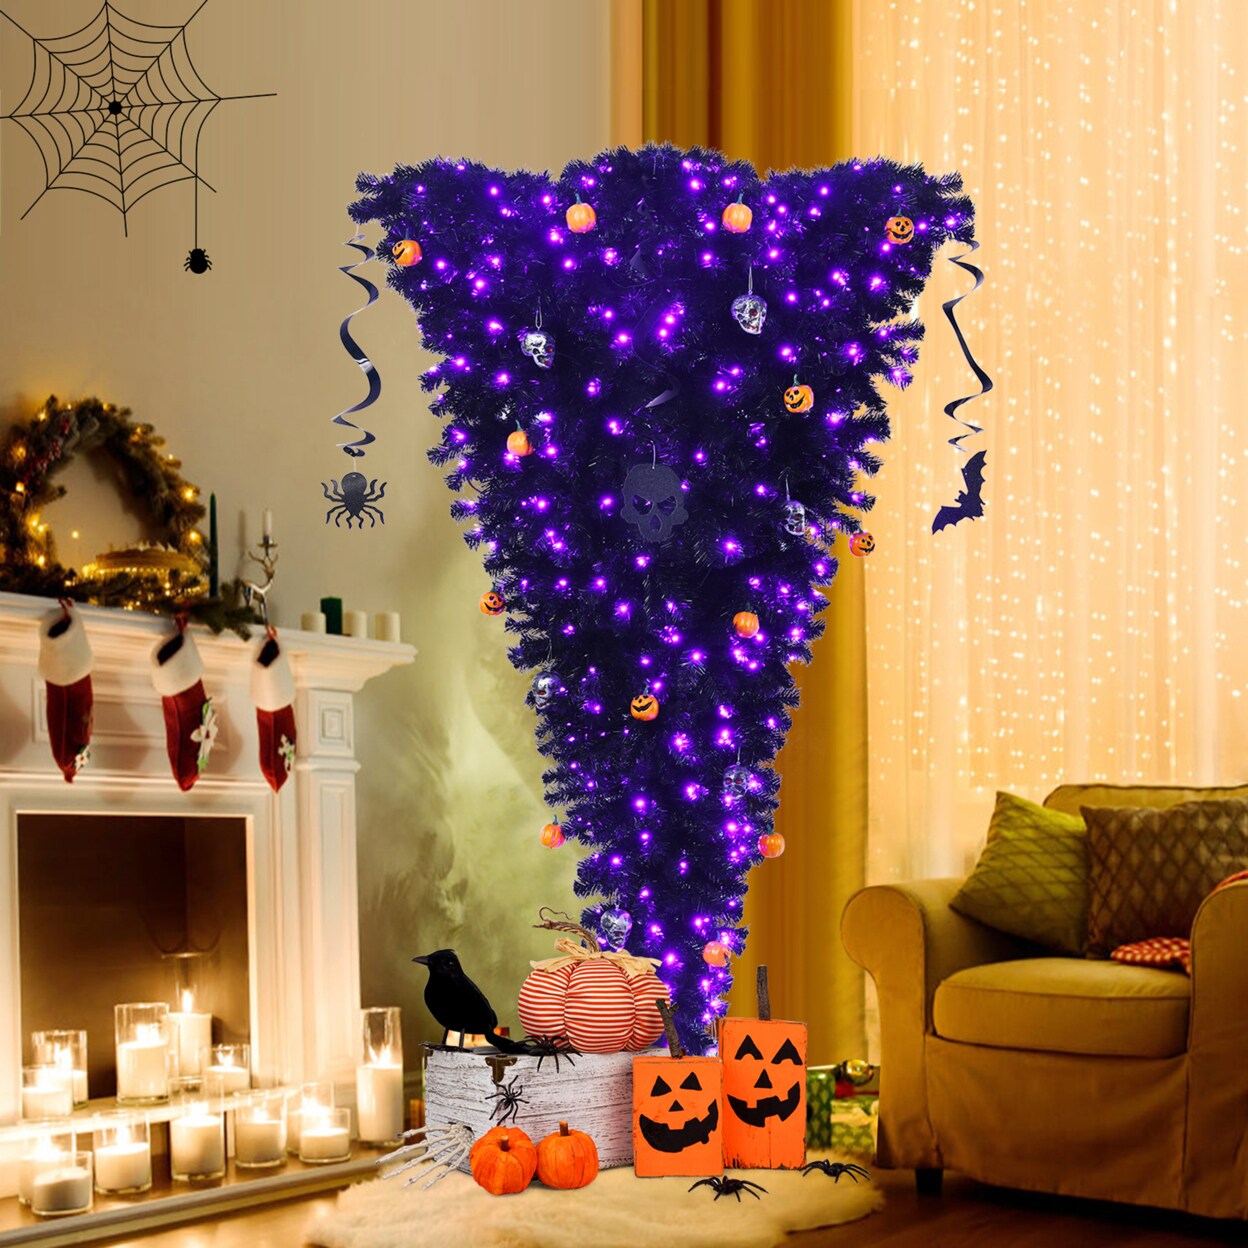 Gymax 6FT Pre-lit Upside Down Black Halloween Tree Artificial Christmas